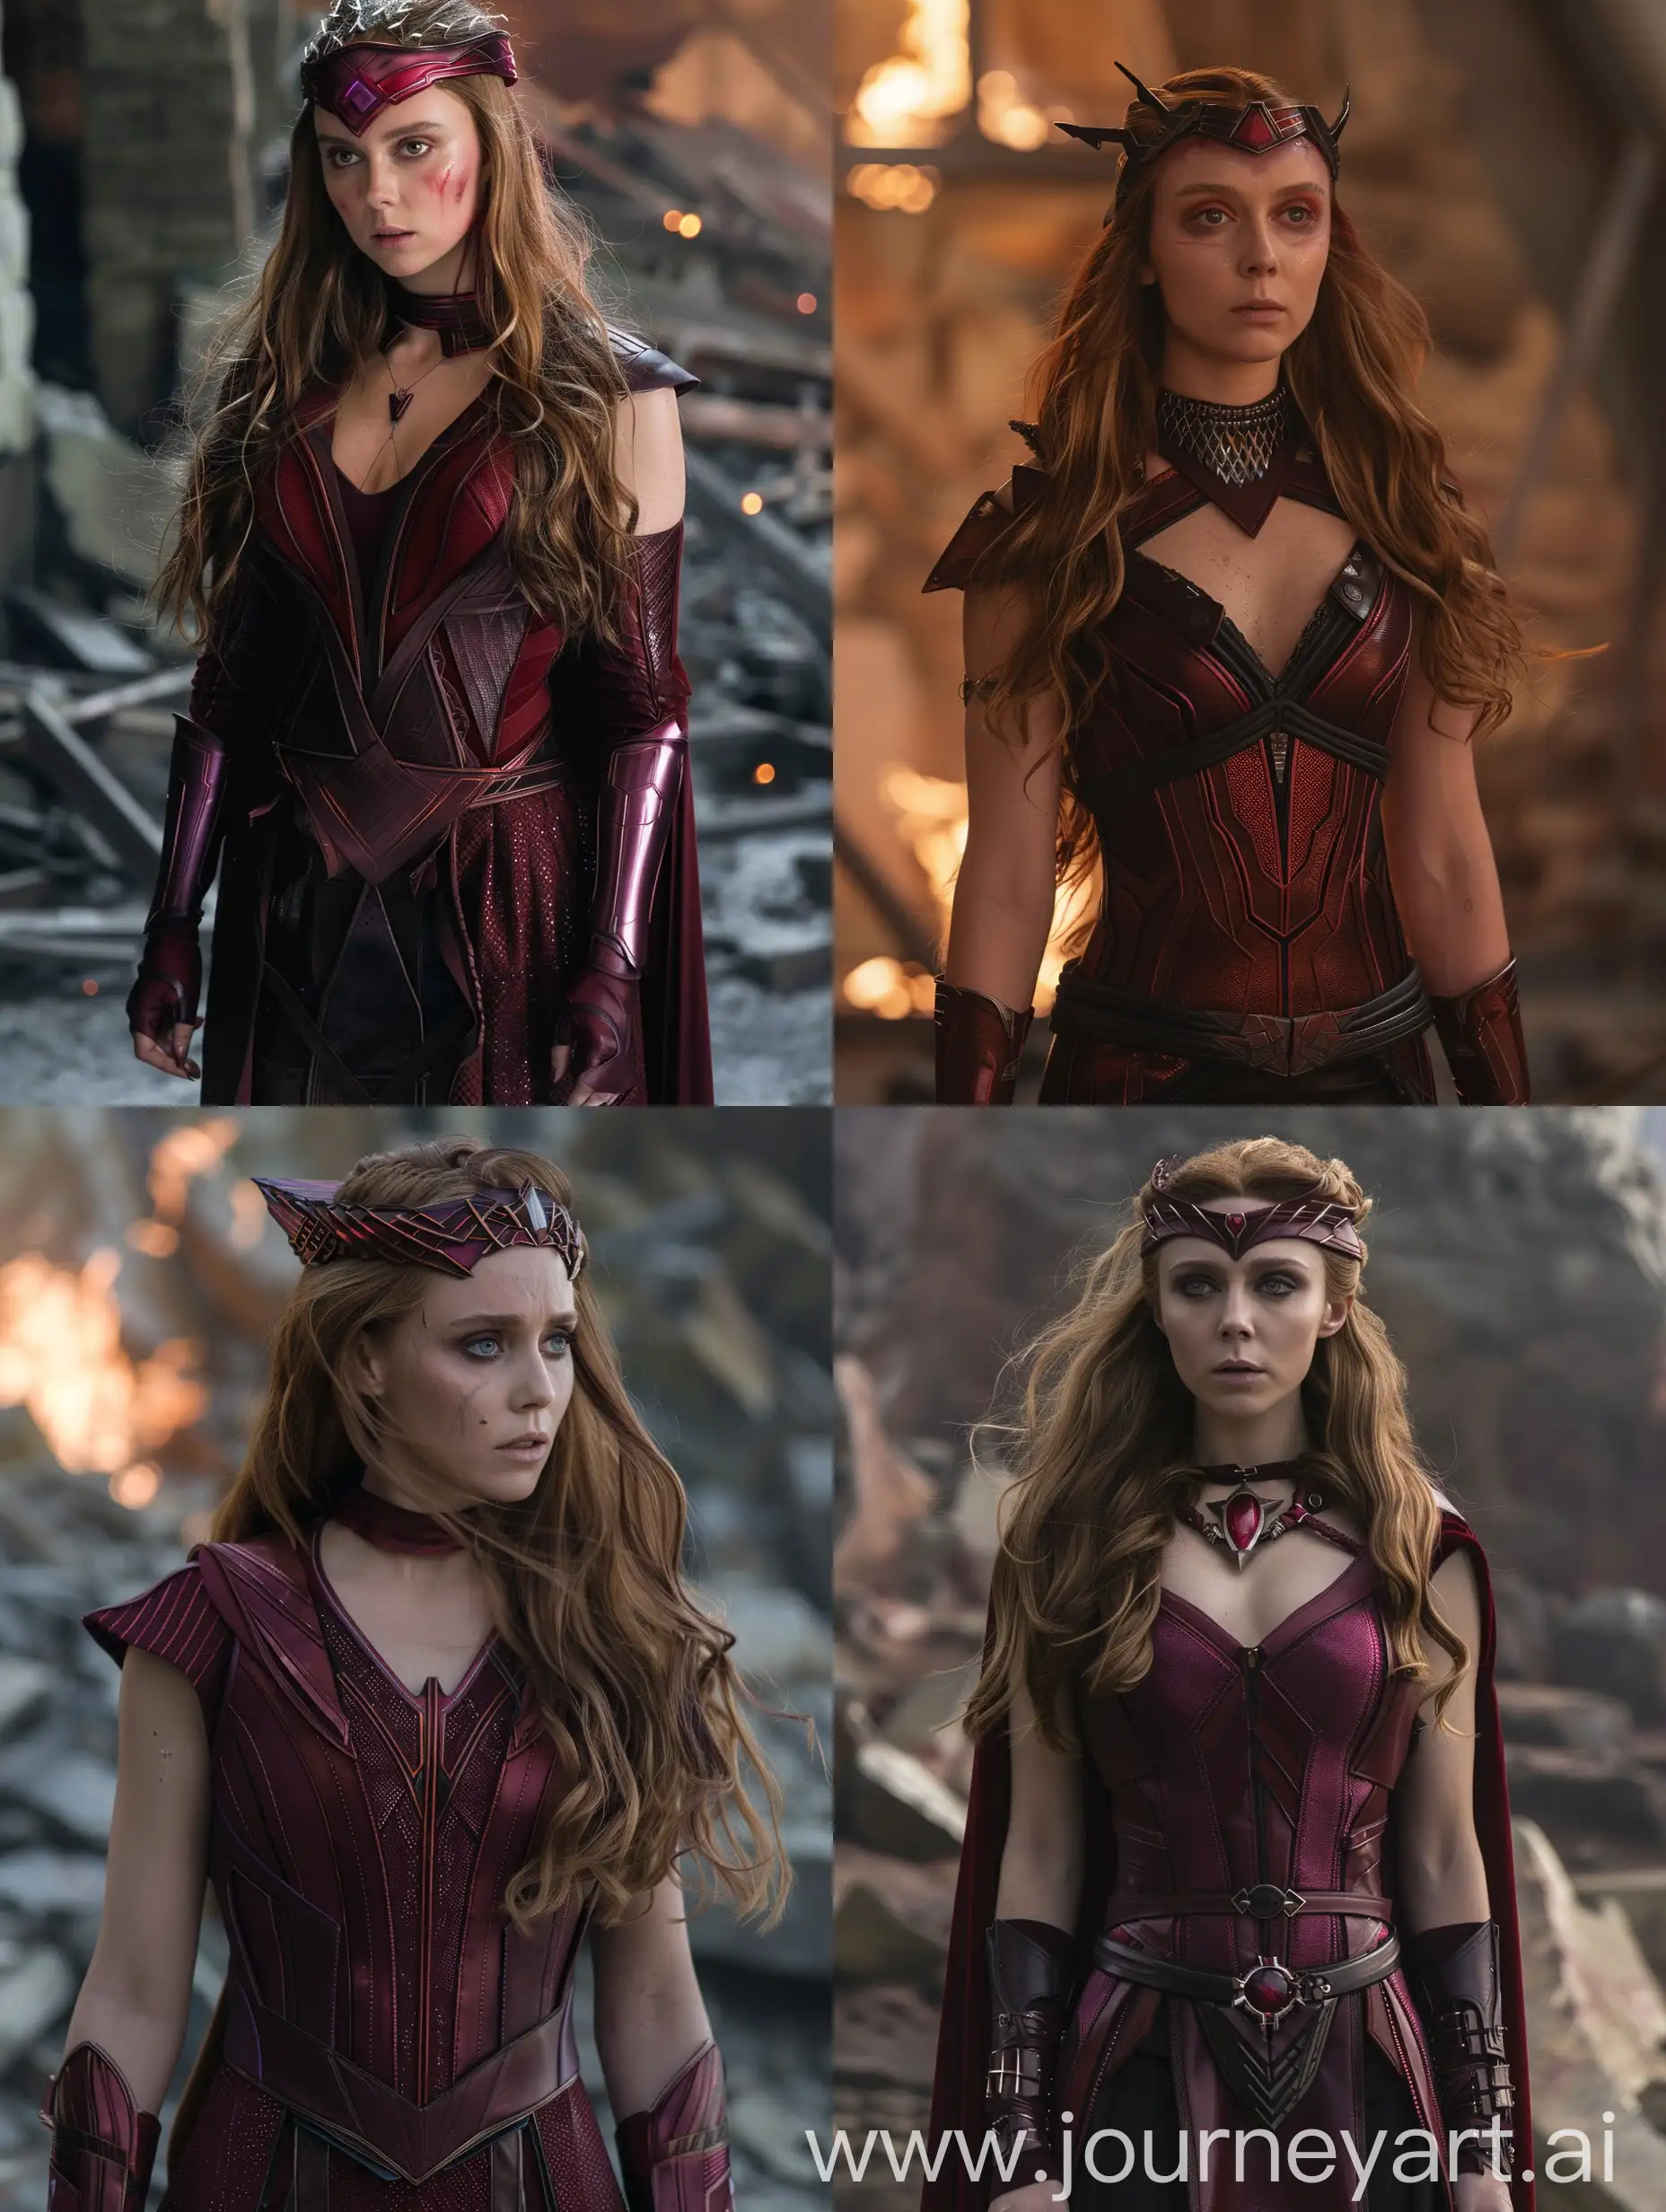 elizabeth olsen wearing  scarllet witch costume from avengers endgame